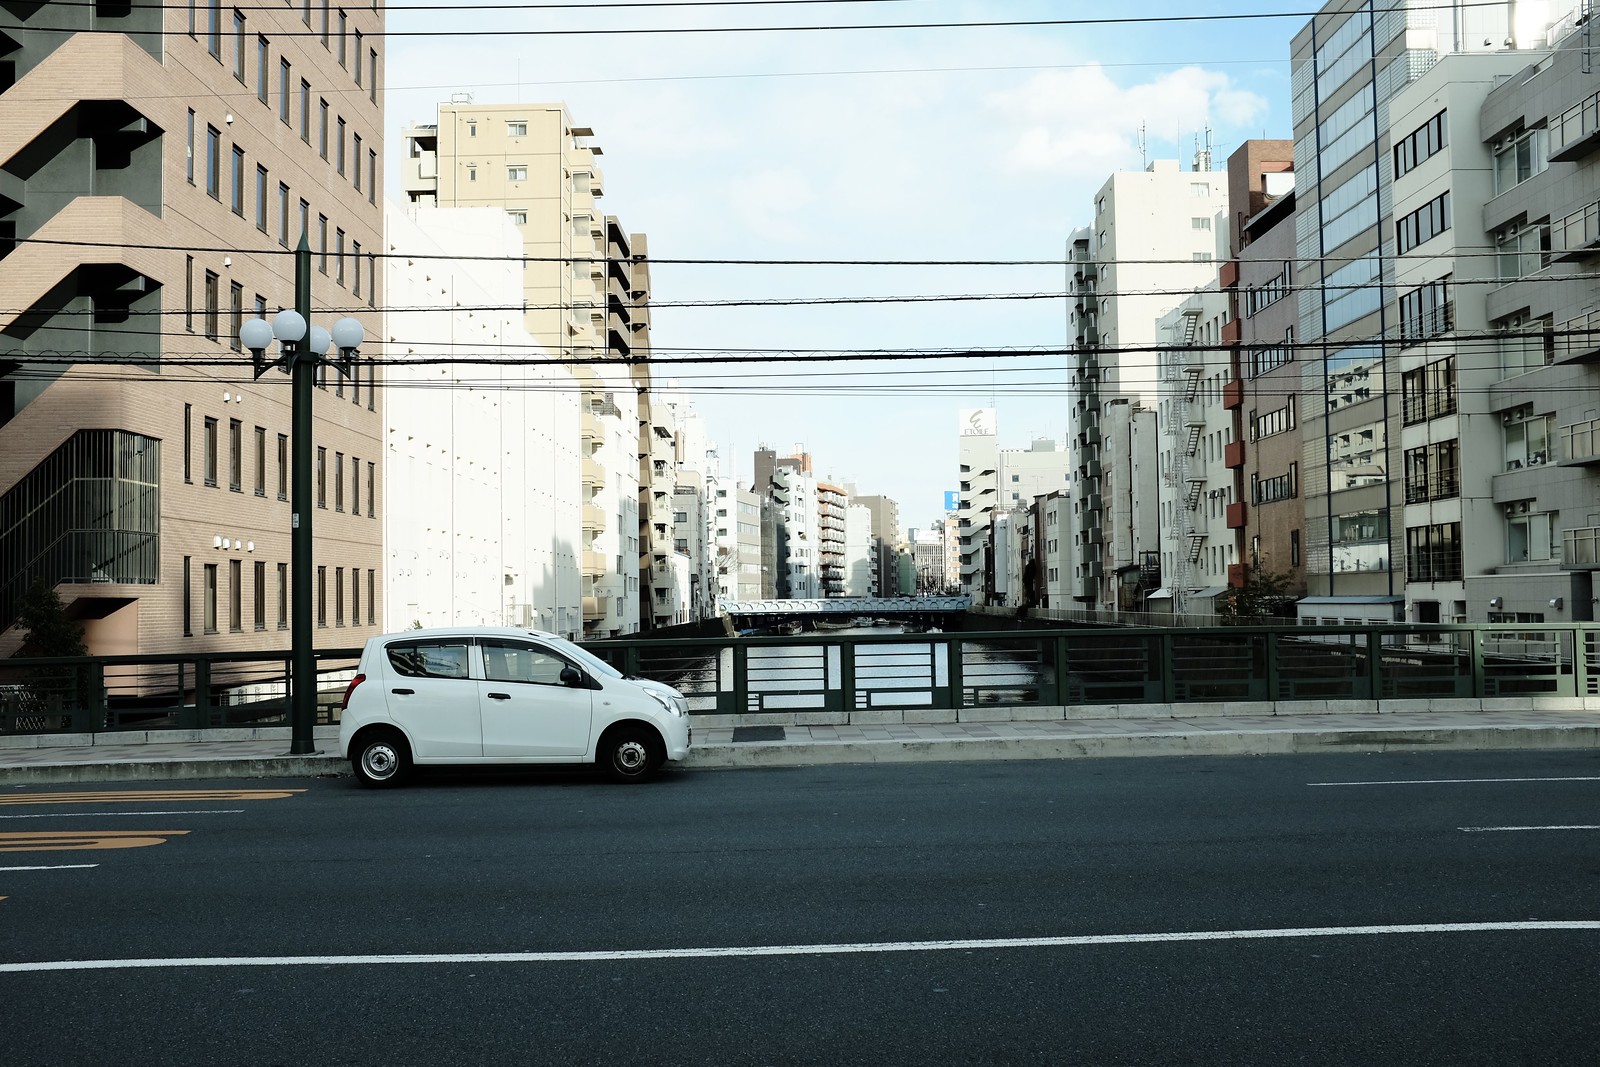 The Tokyo Photo